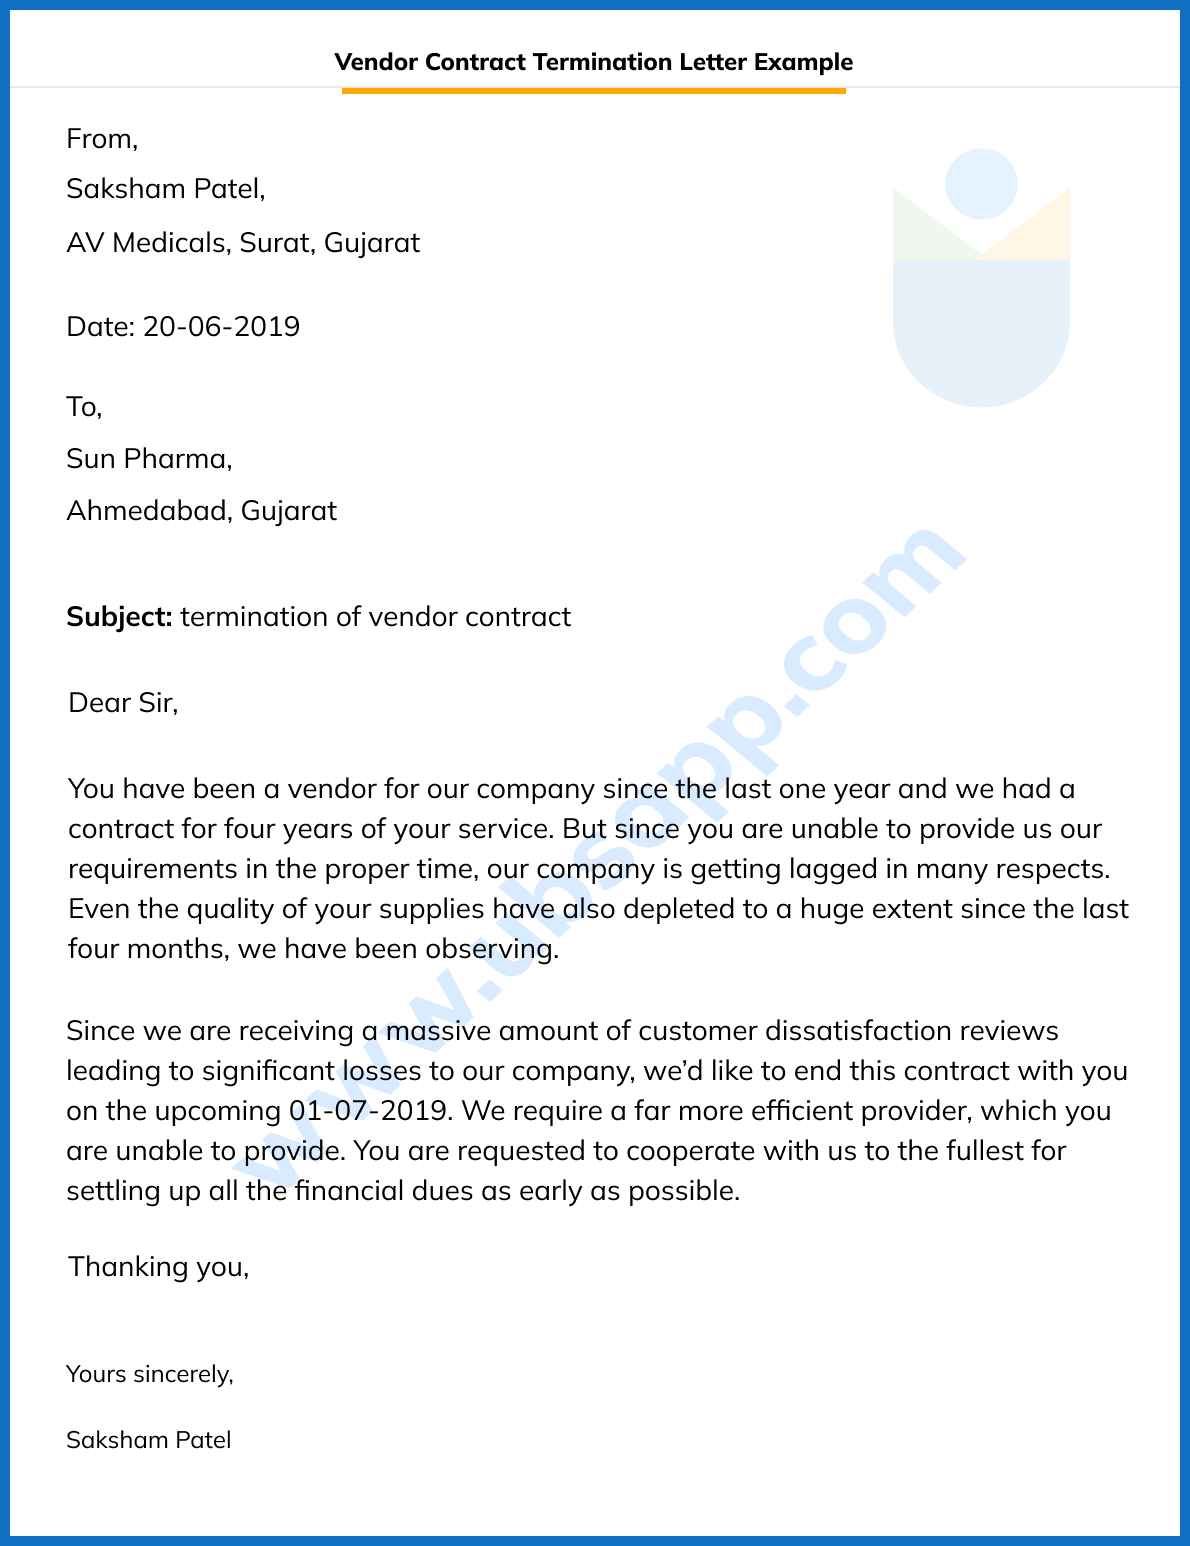 Vendor Contract Termination Letter Example